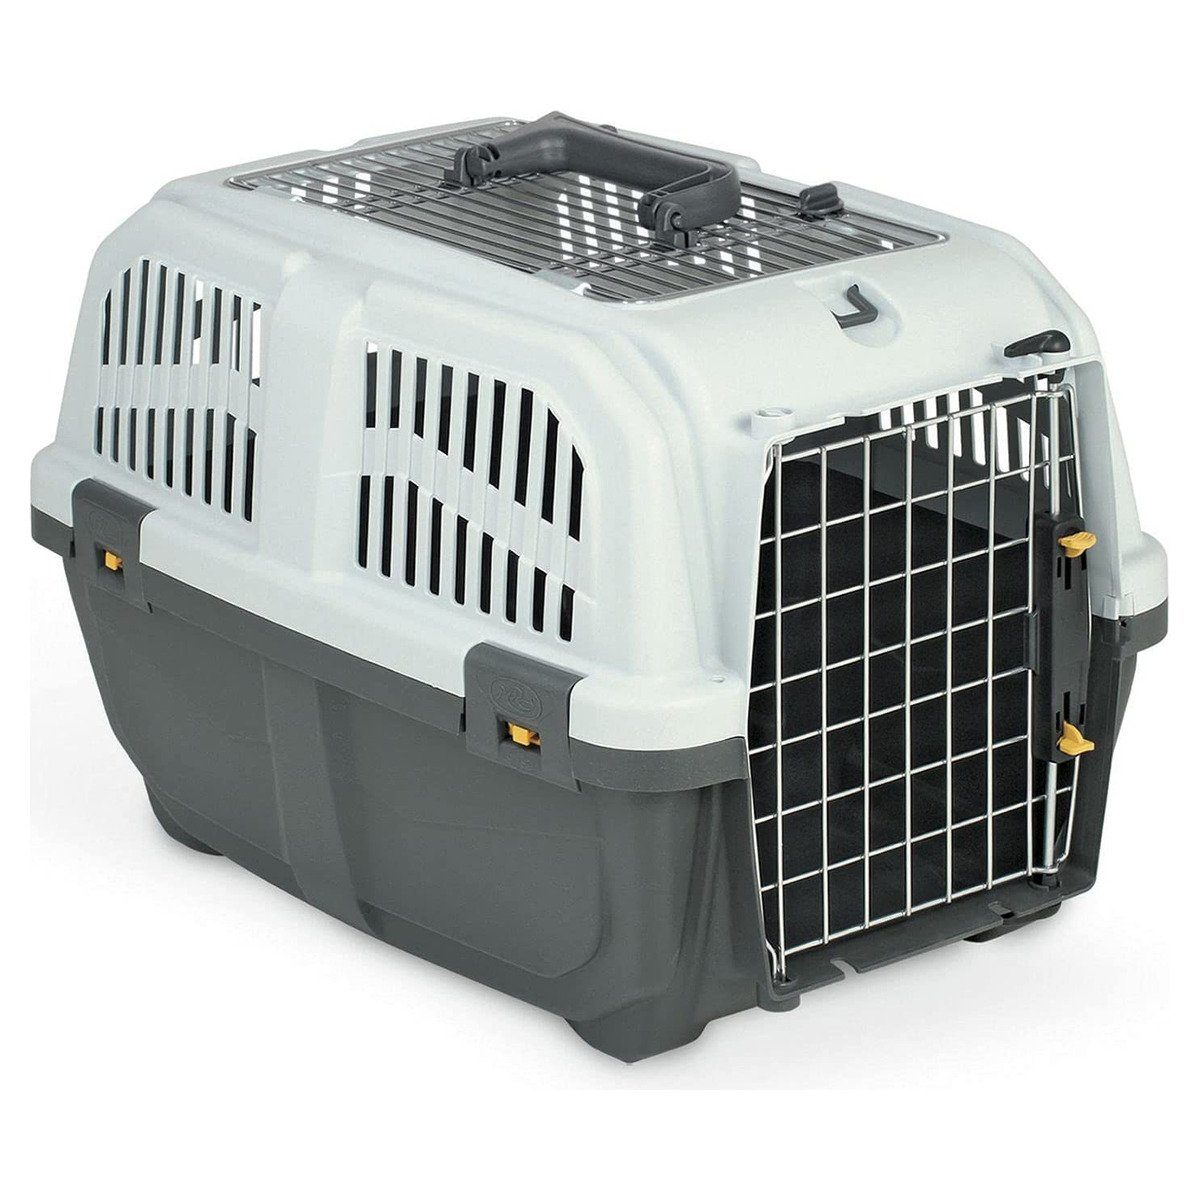 Nobby Hunde-Transportbox Transportbox Skudo Open grau für Hunde